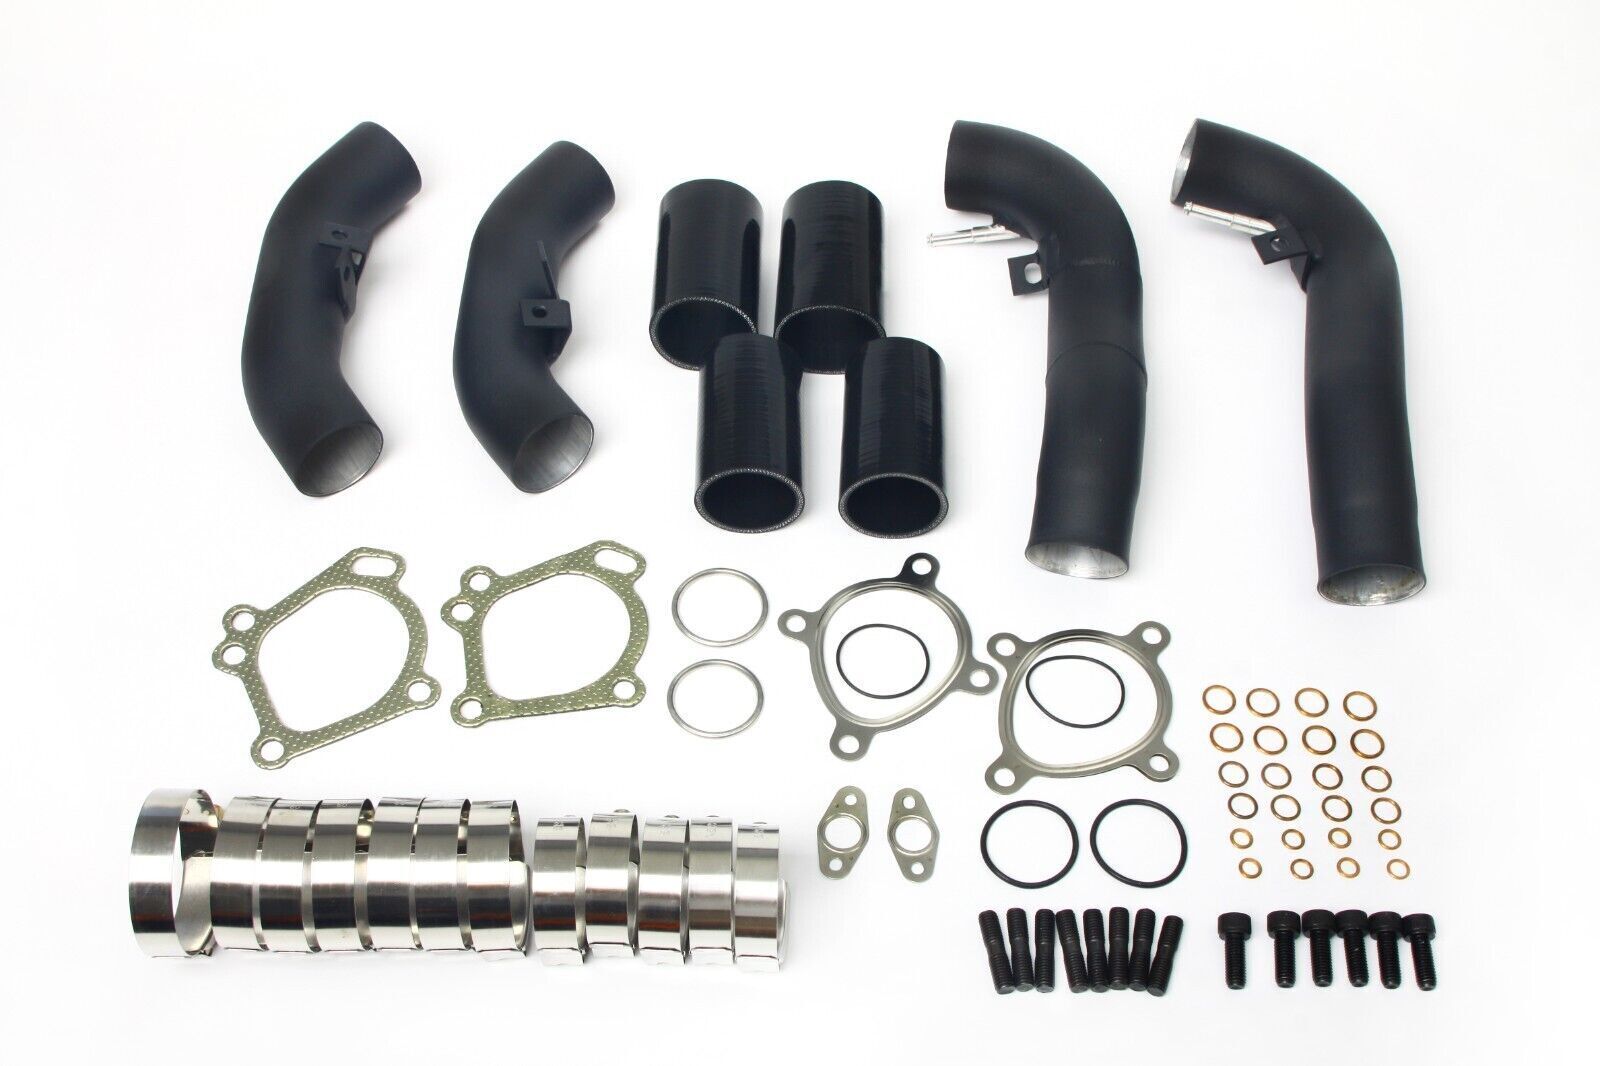 Turbo Inlet Pipe kit for Audi RS4 S4 Avant B5 A6 Allroad Quattro K04-28 K04-29